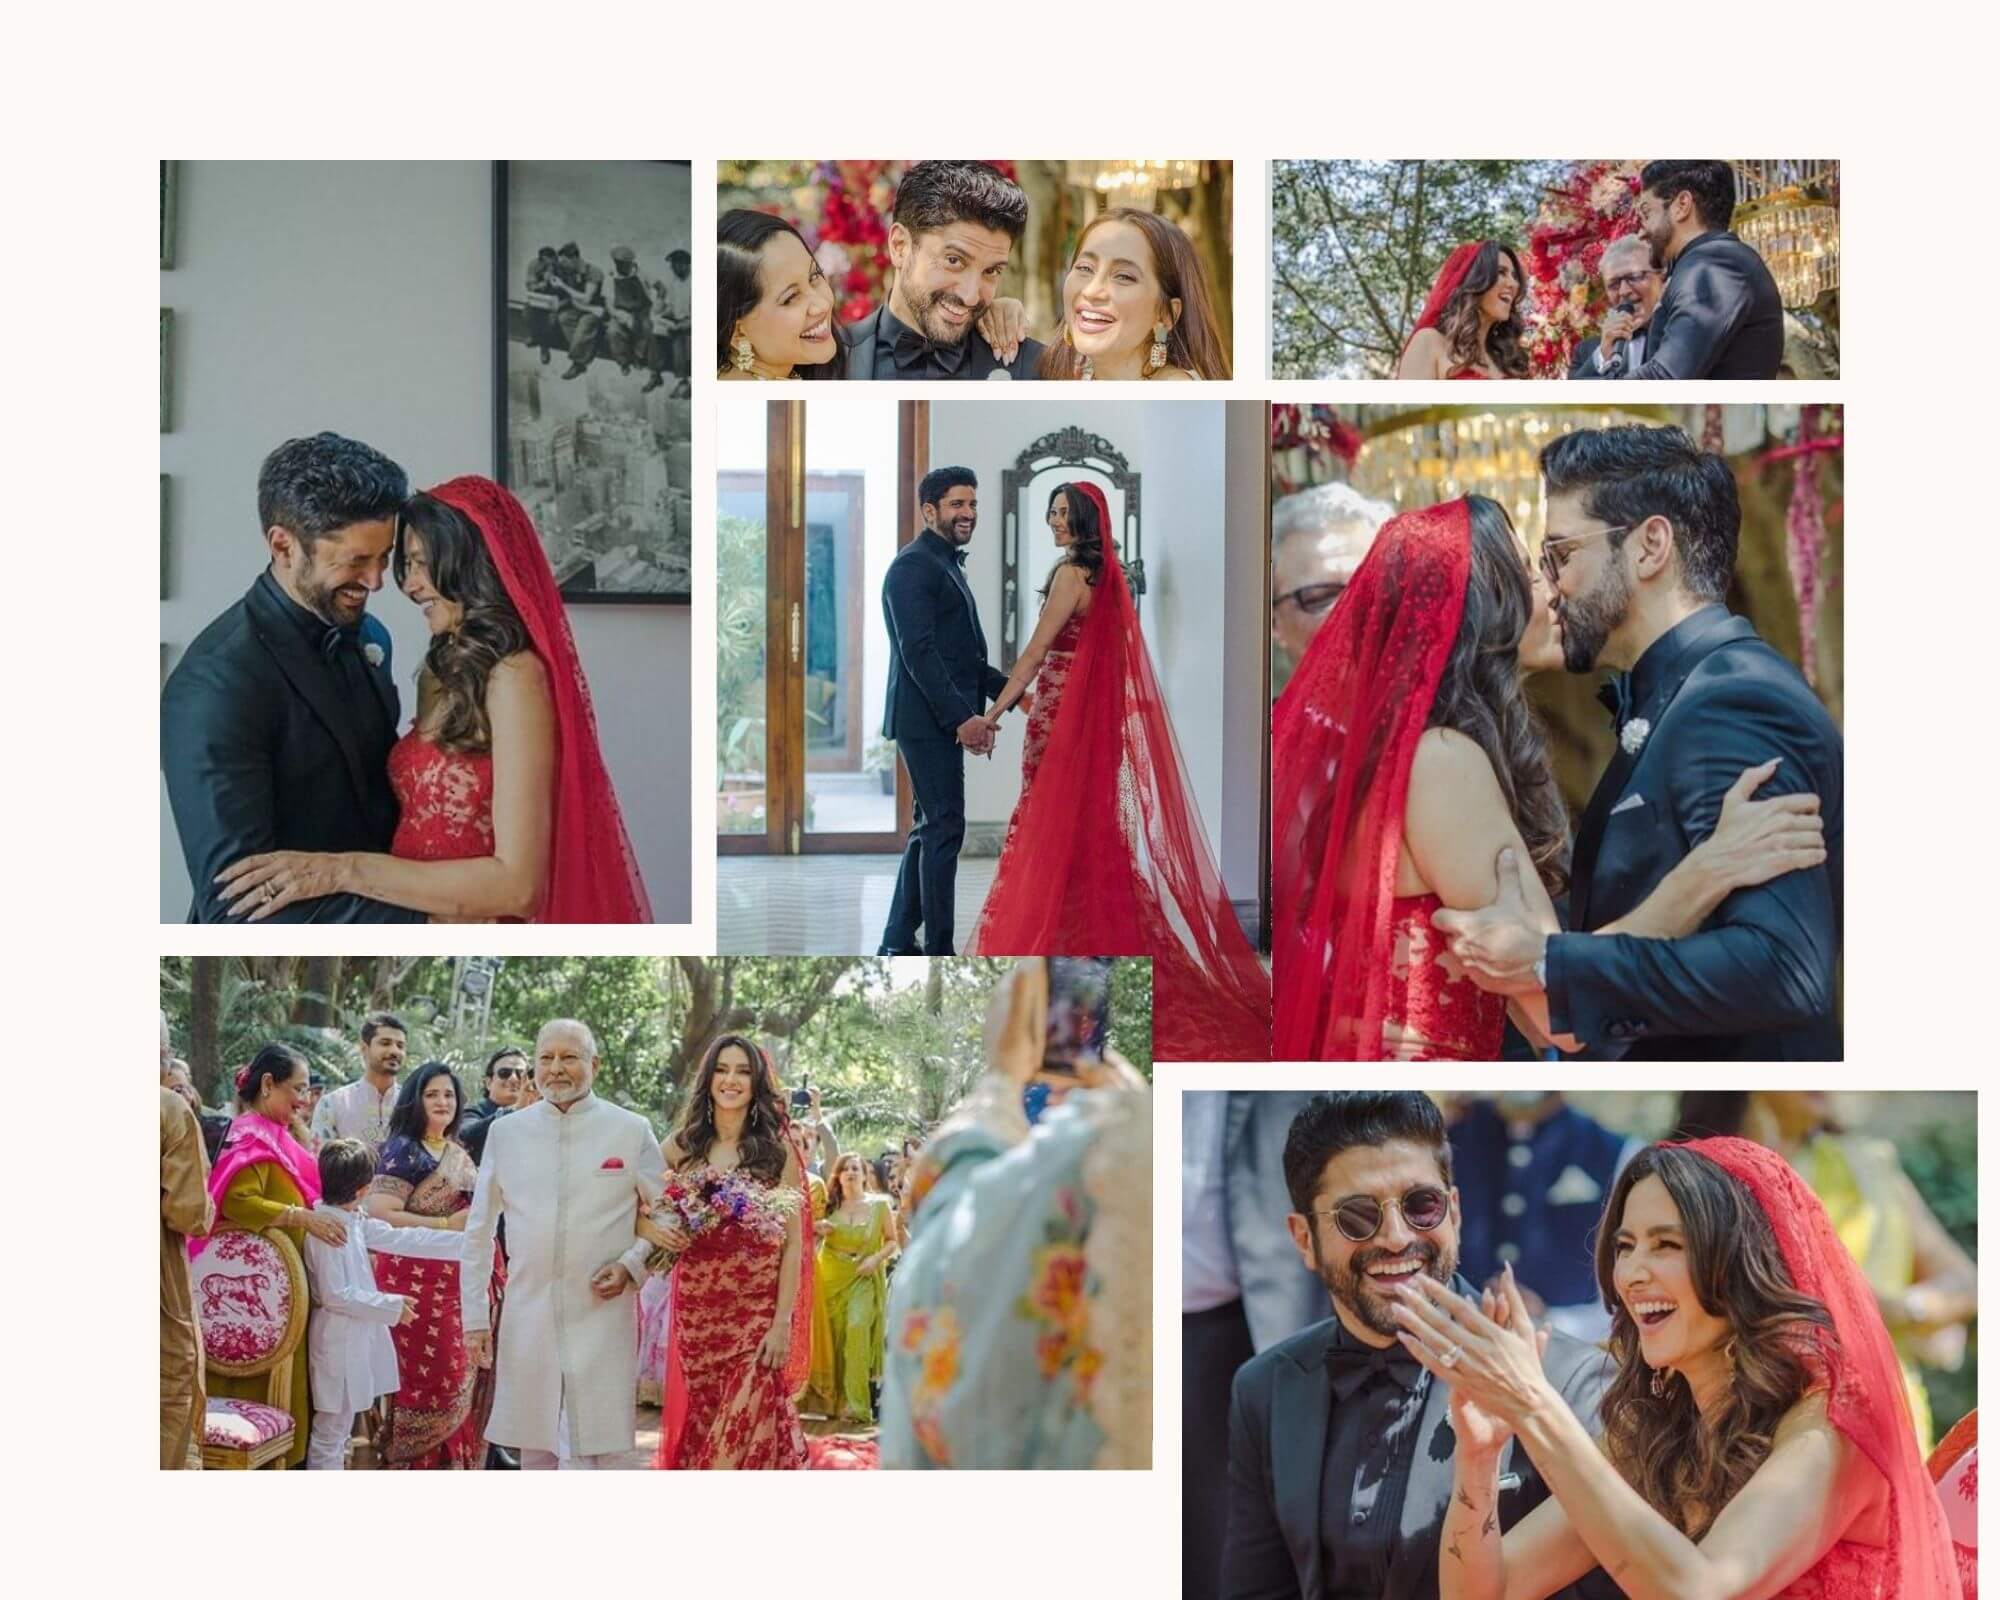 Shibani Dandekar And Farhan Akhtar's Wedding Photo: Who Is Shibani Dandekar? Everything You Need To Know About Farhan Akhtar’s New Wife